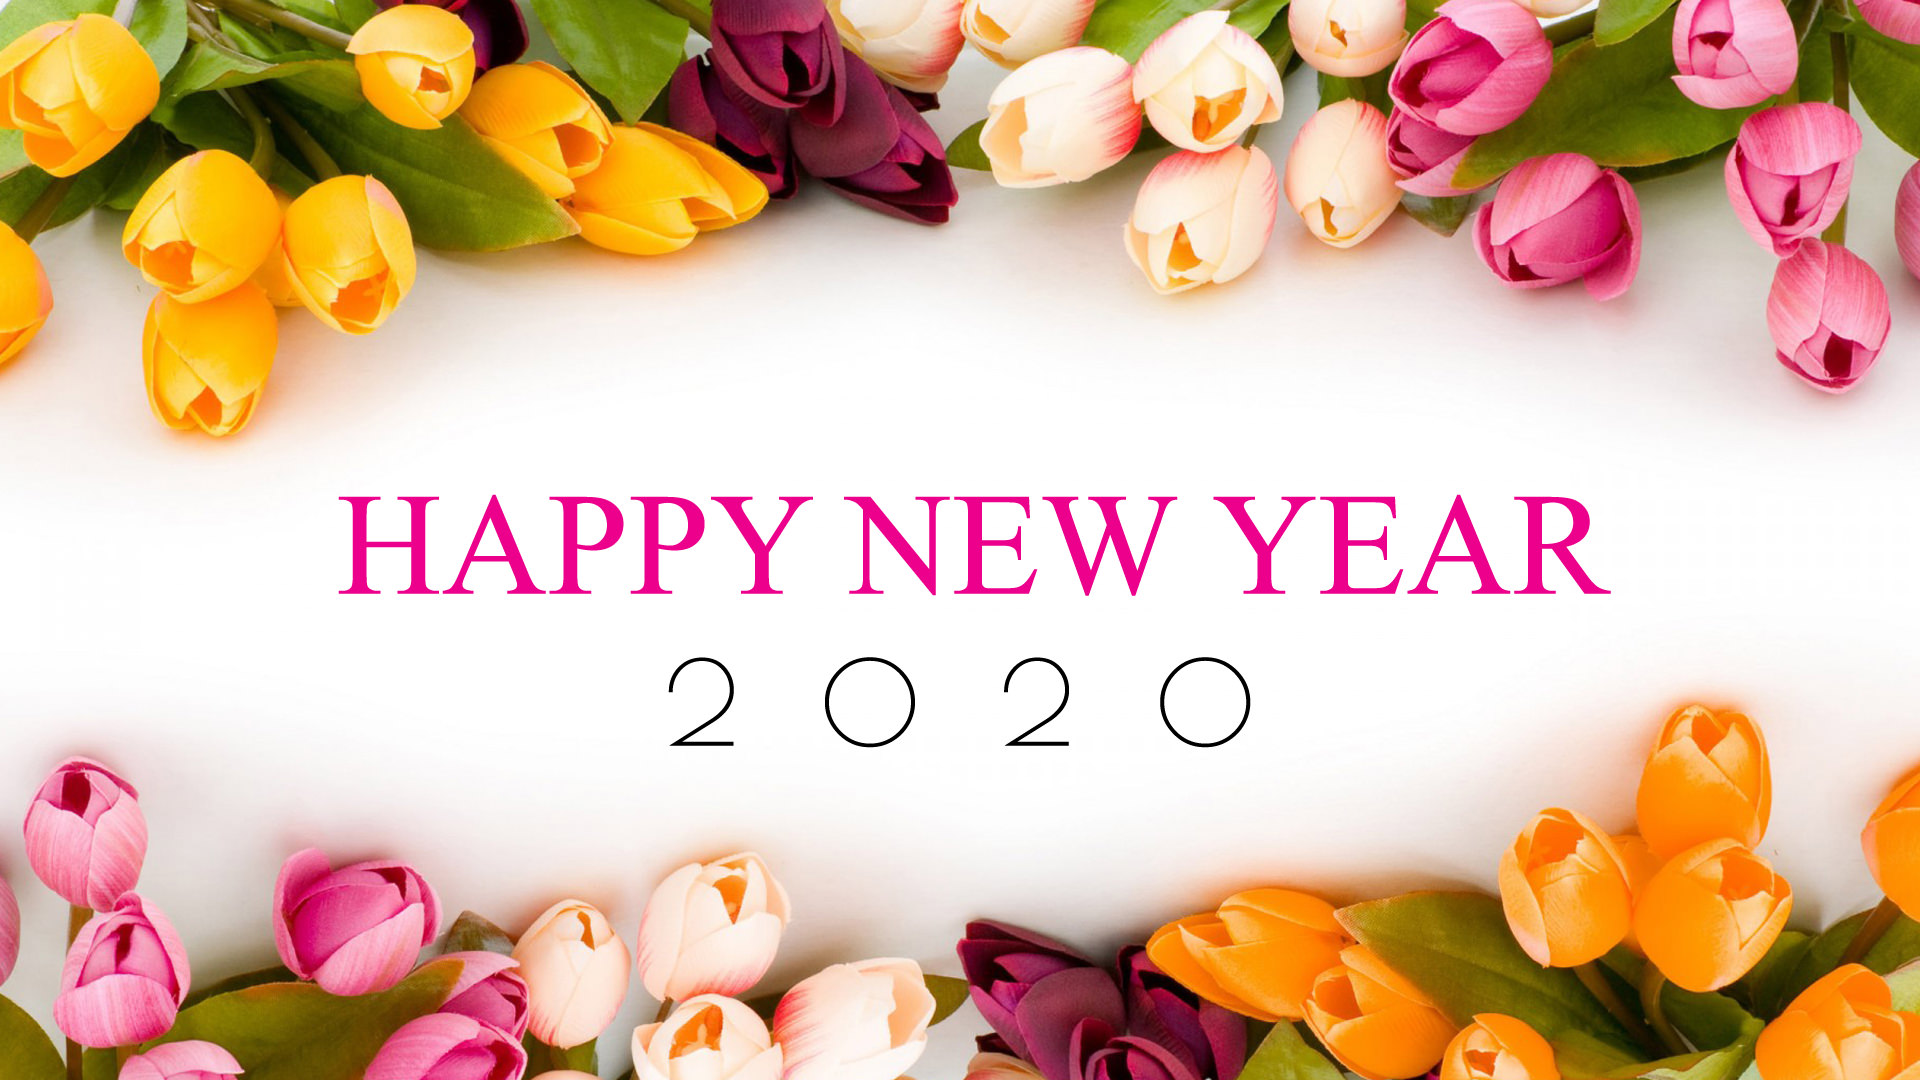 Happy New Year 2020 Flowers Wallpaper